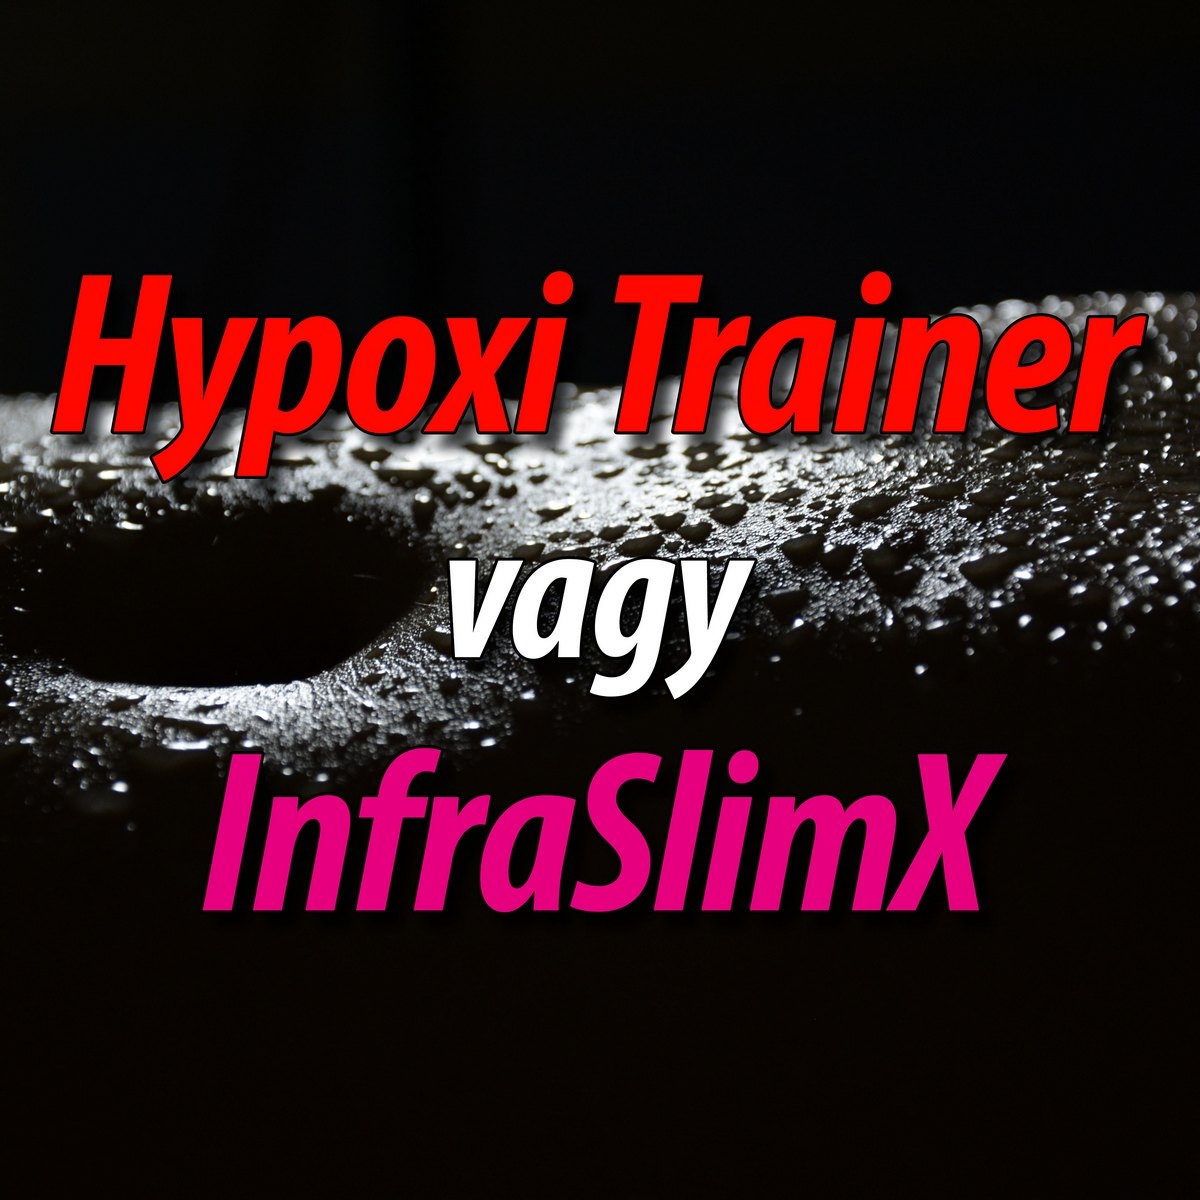 hypoxi trainer budapest